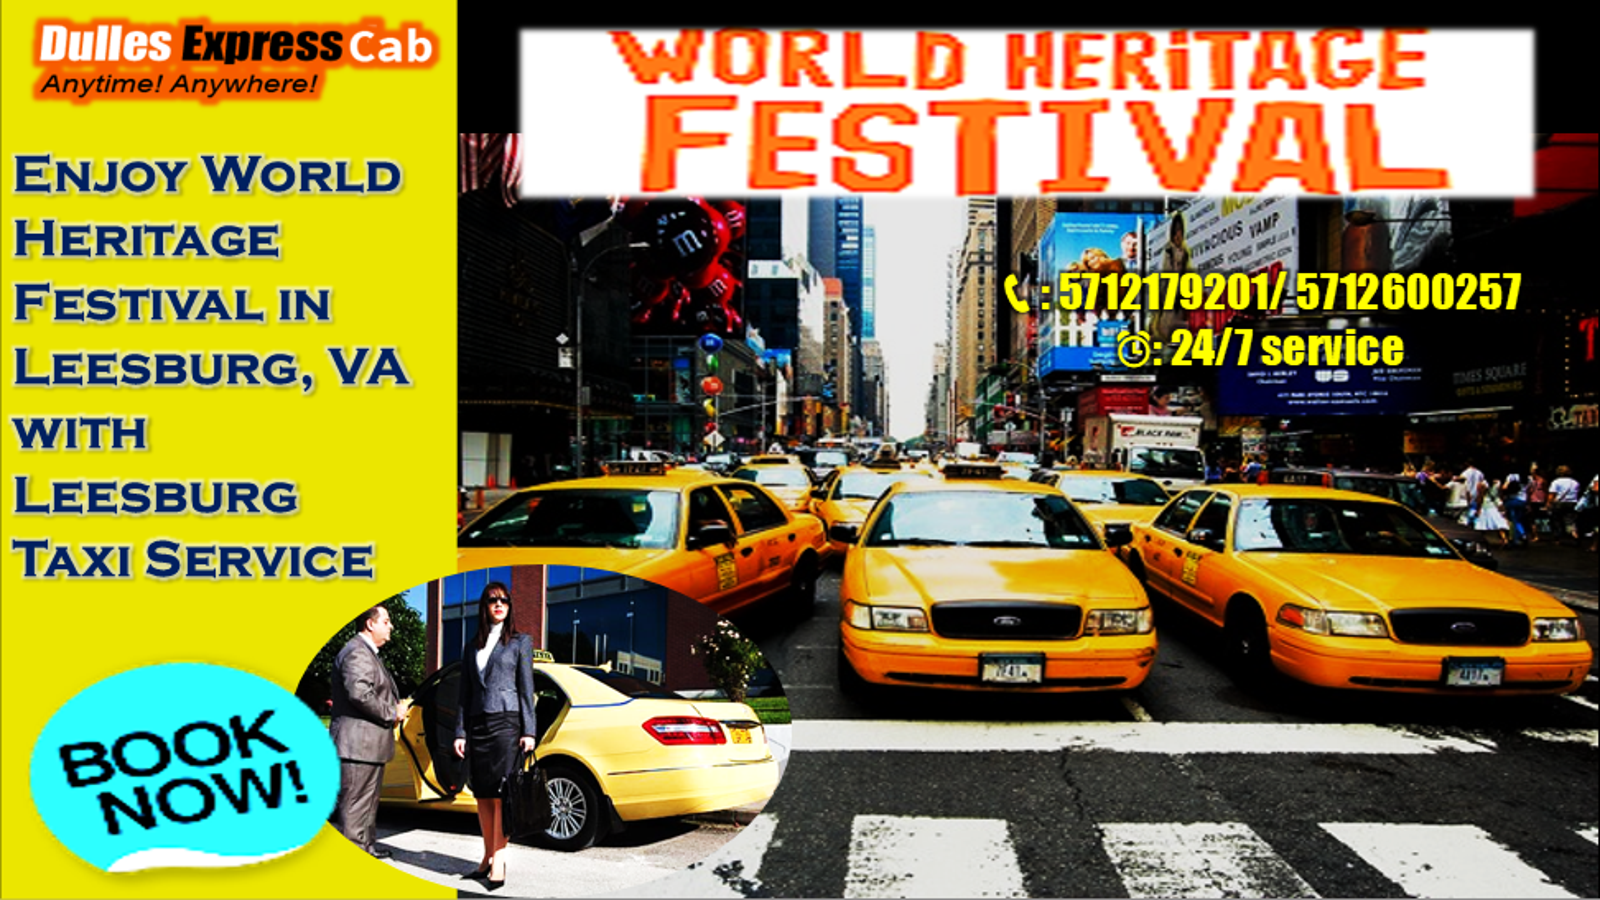 Enjoy World Heritage Festival in Leesburg, VA with Leesburg Taxi Service